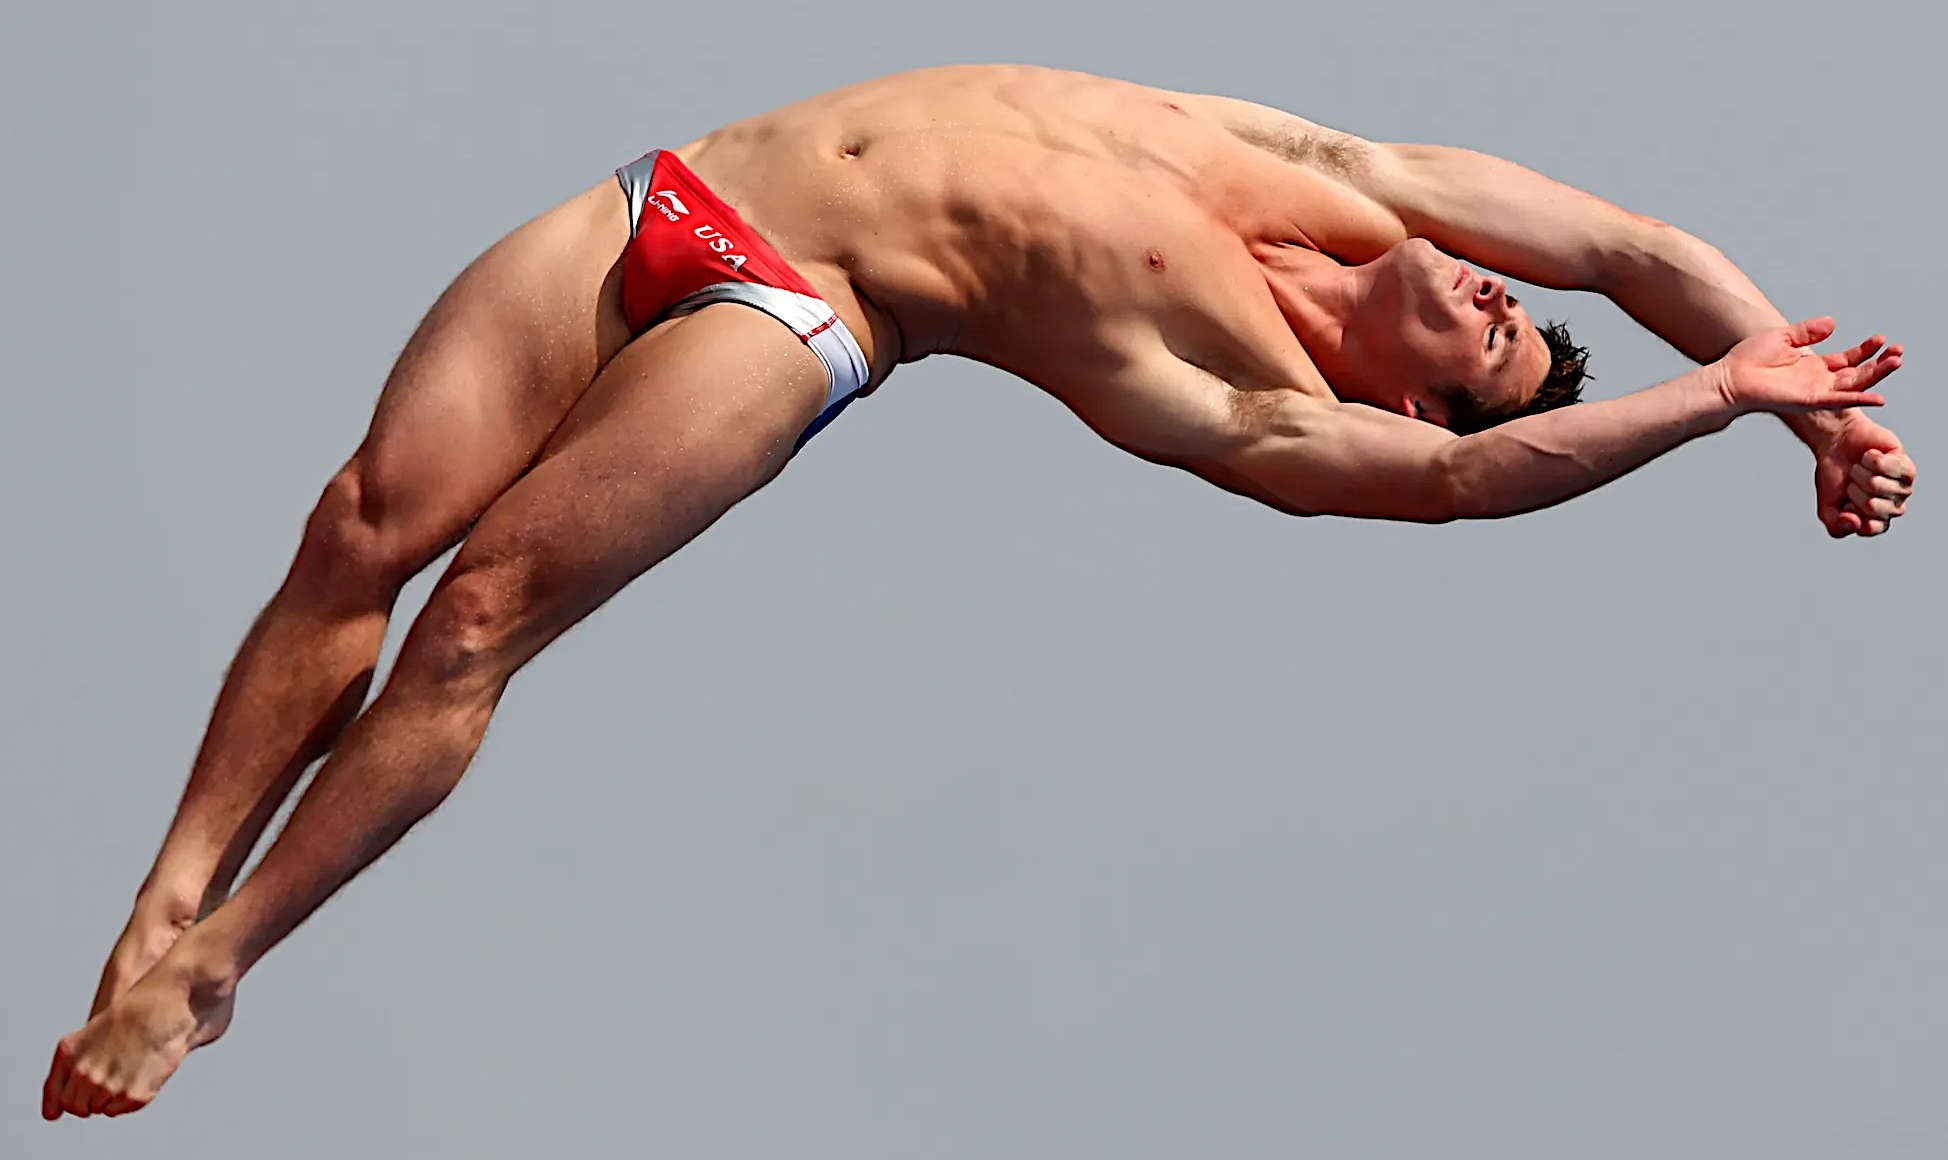 David Boudia, Olympic high diver